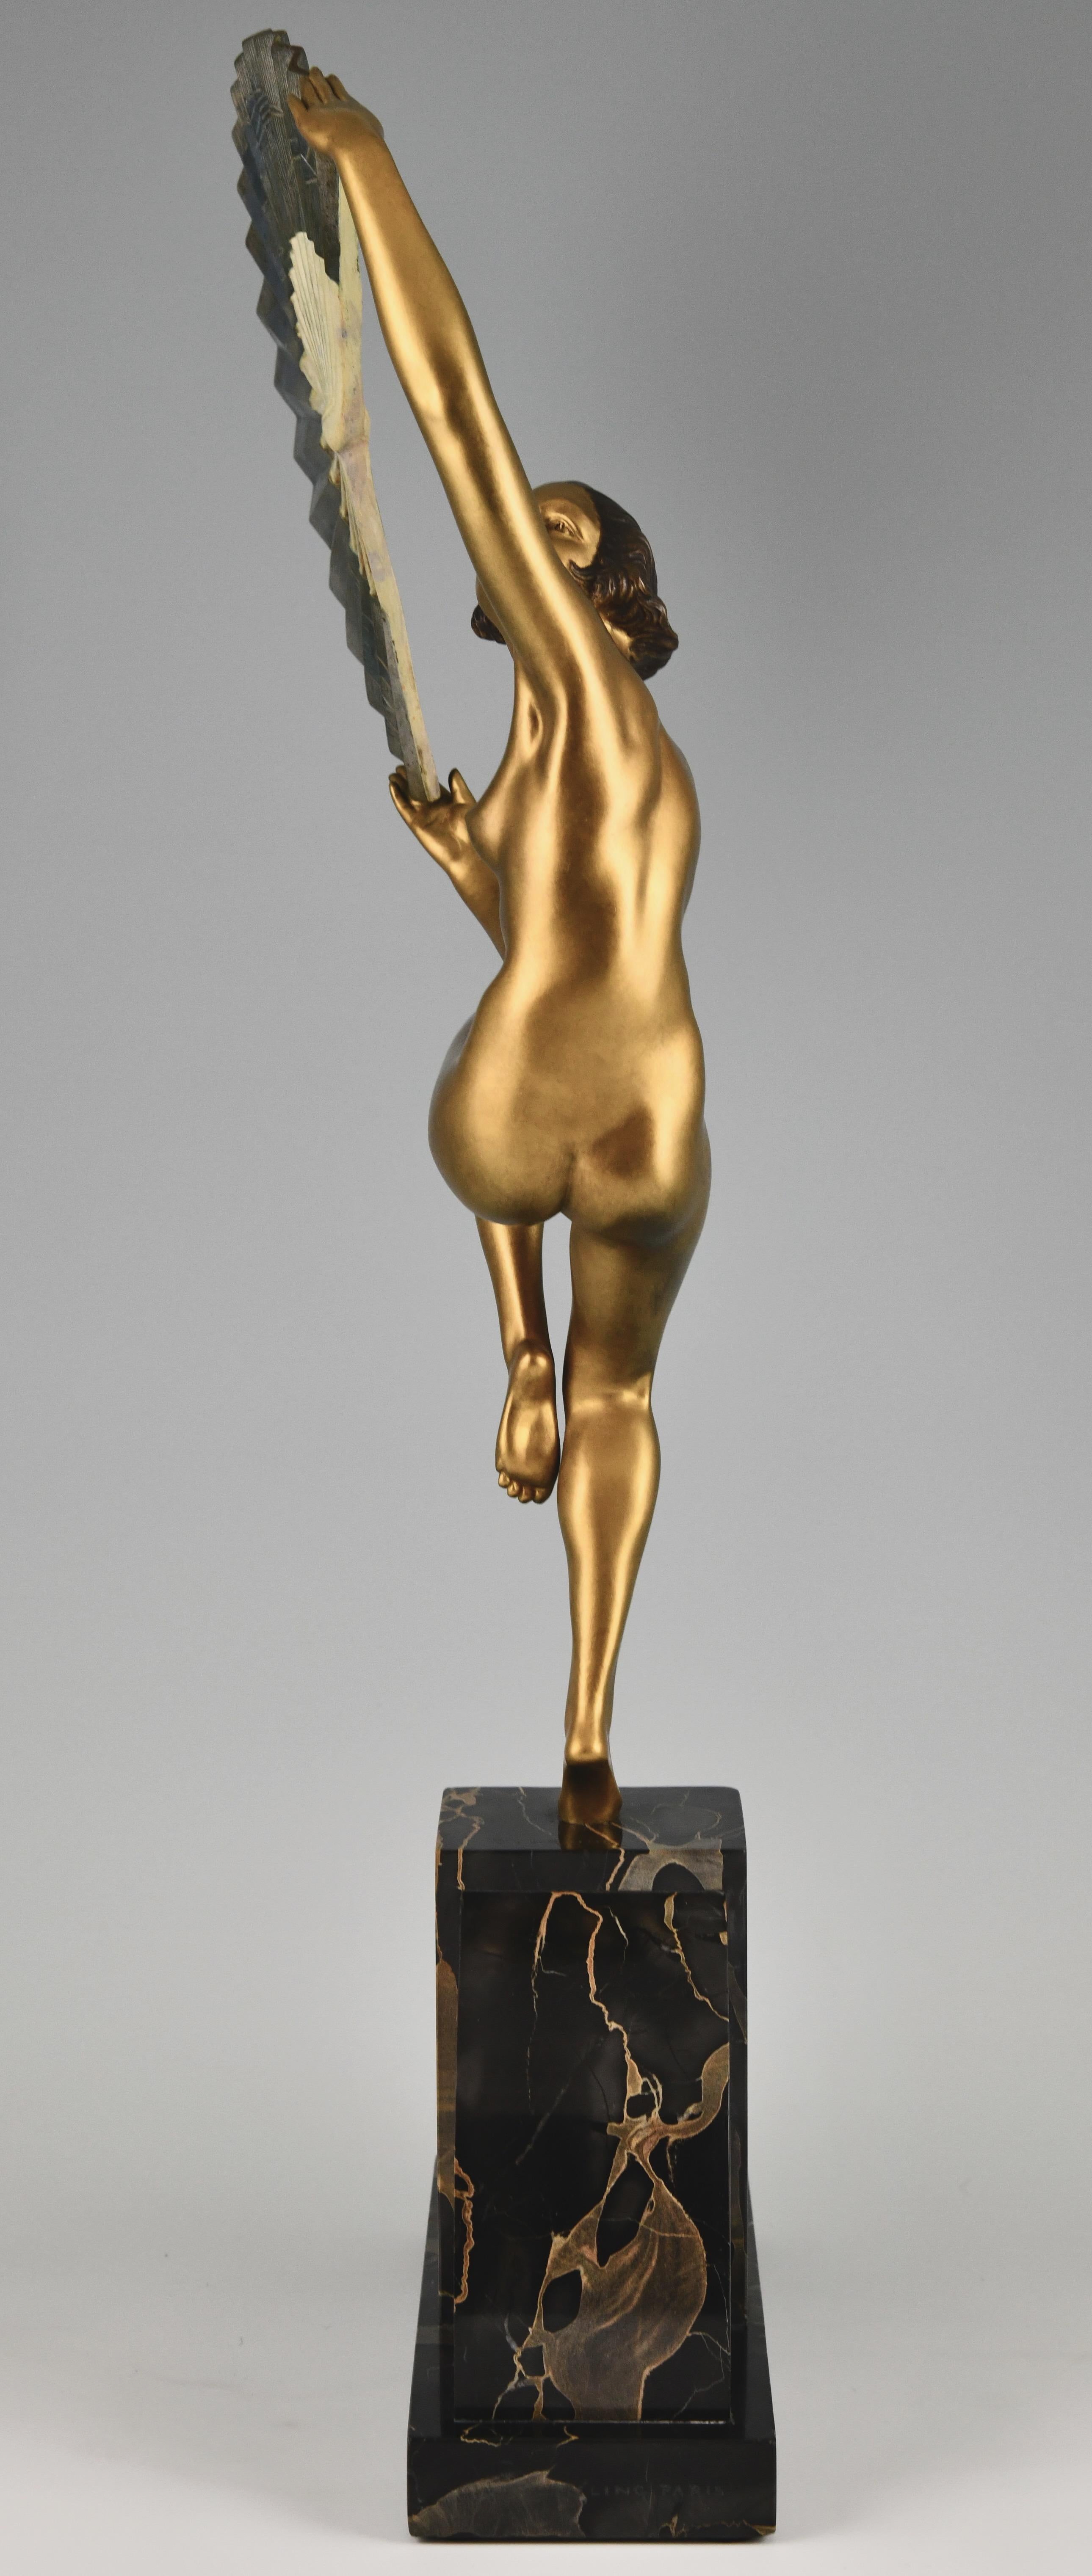 Marble Art Deco bronze sculpture nude fan dancer by Marcel Andre Bouraine France 21925 For Sale